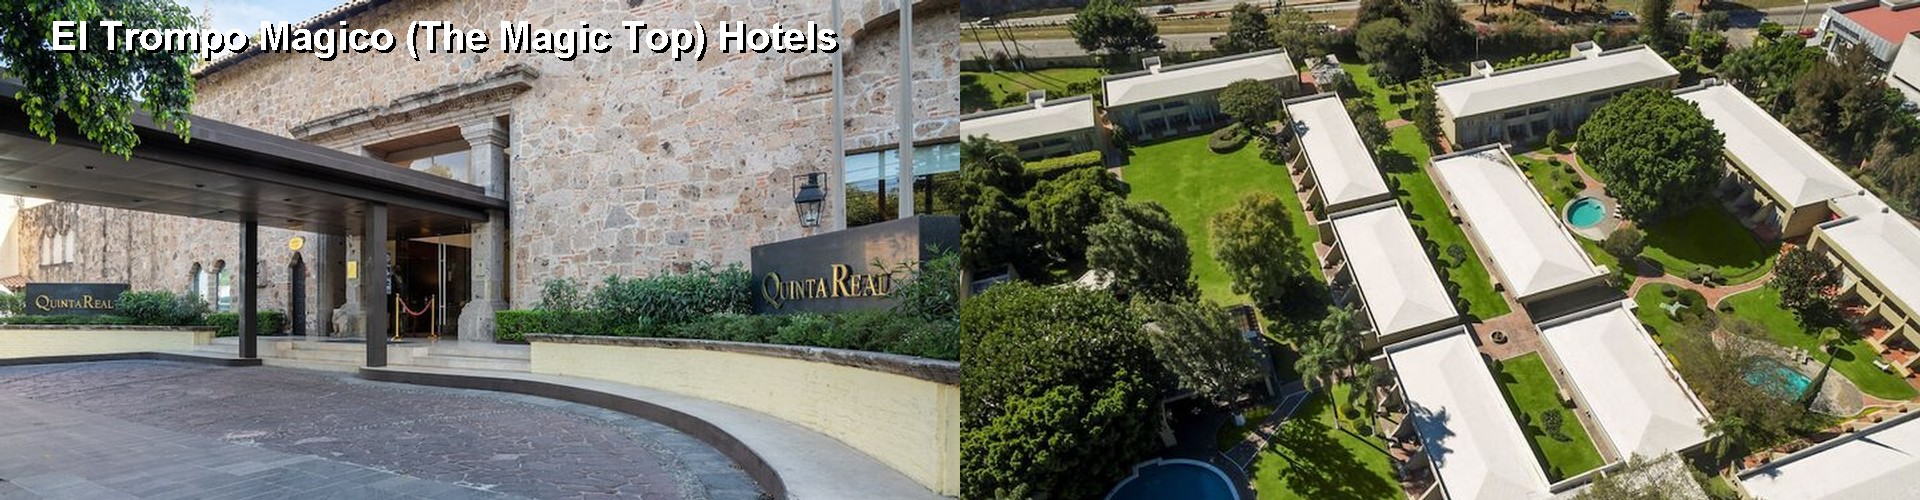 5 Best Hotels near El Trompo Magico (The Magic Top)